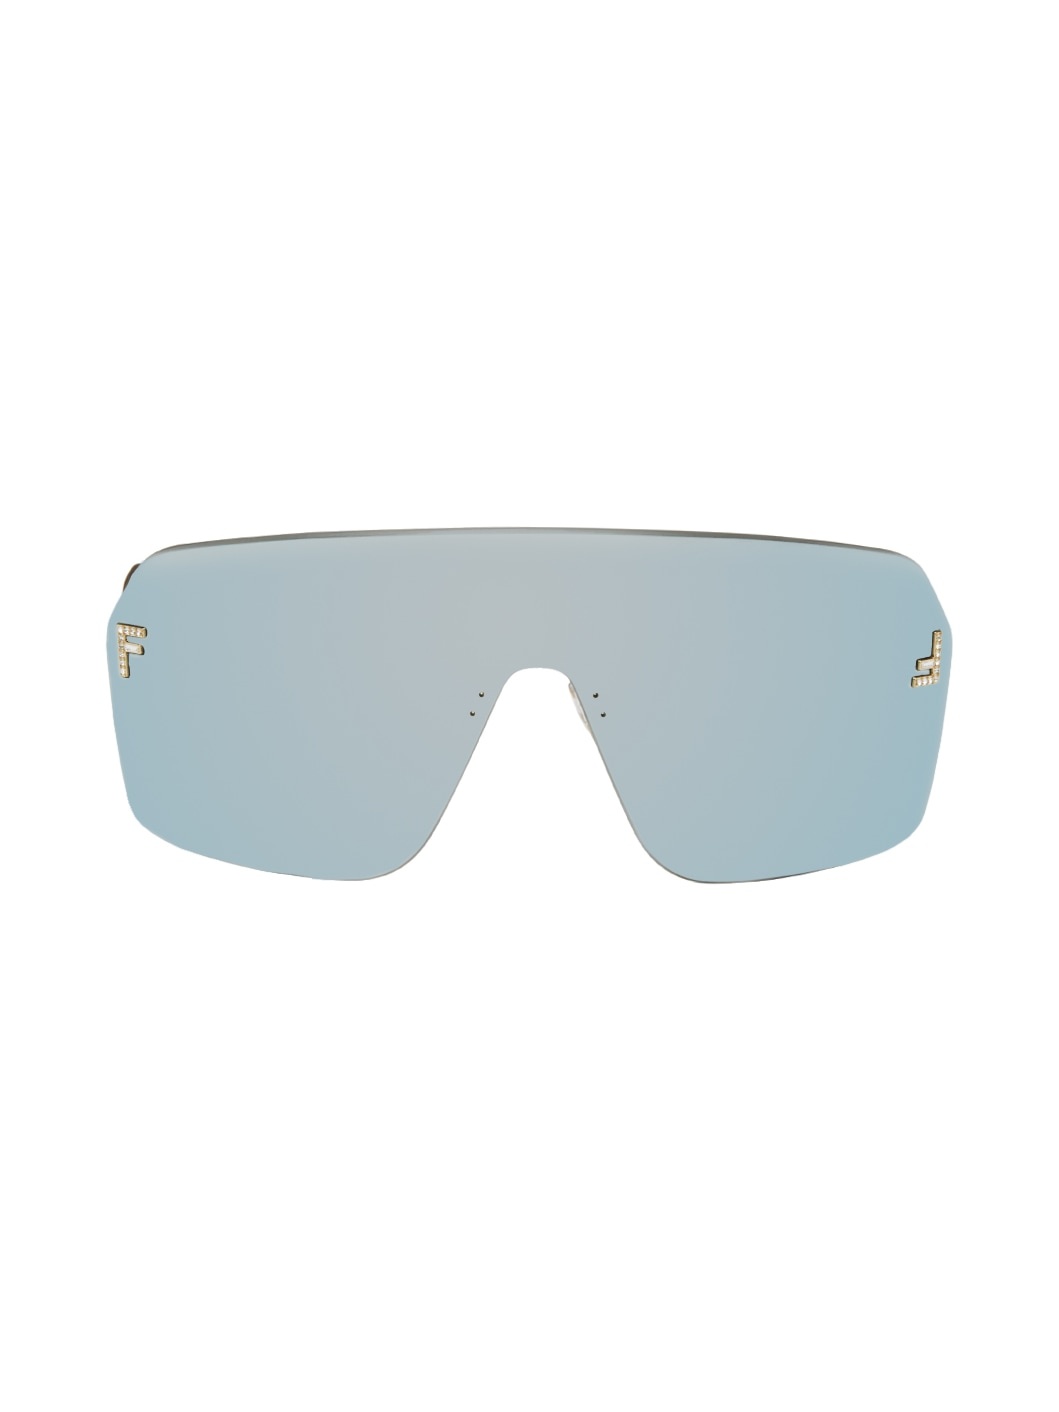 Gold Fendi First Crystal Sunglasses - 1